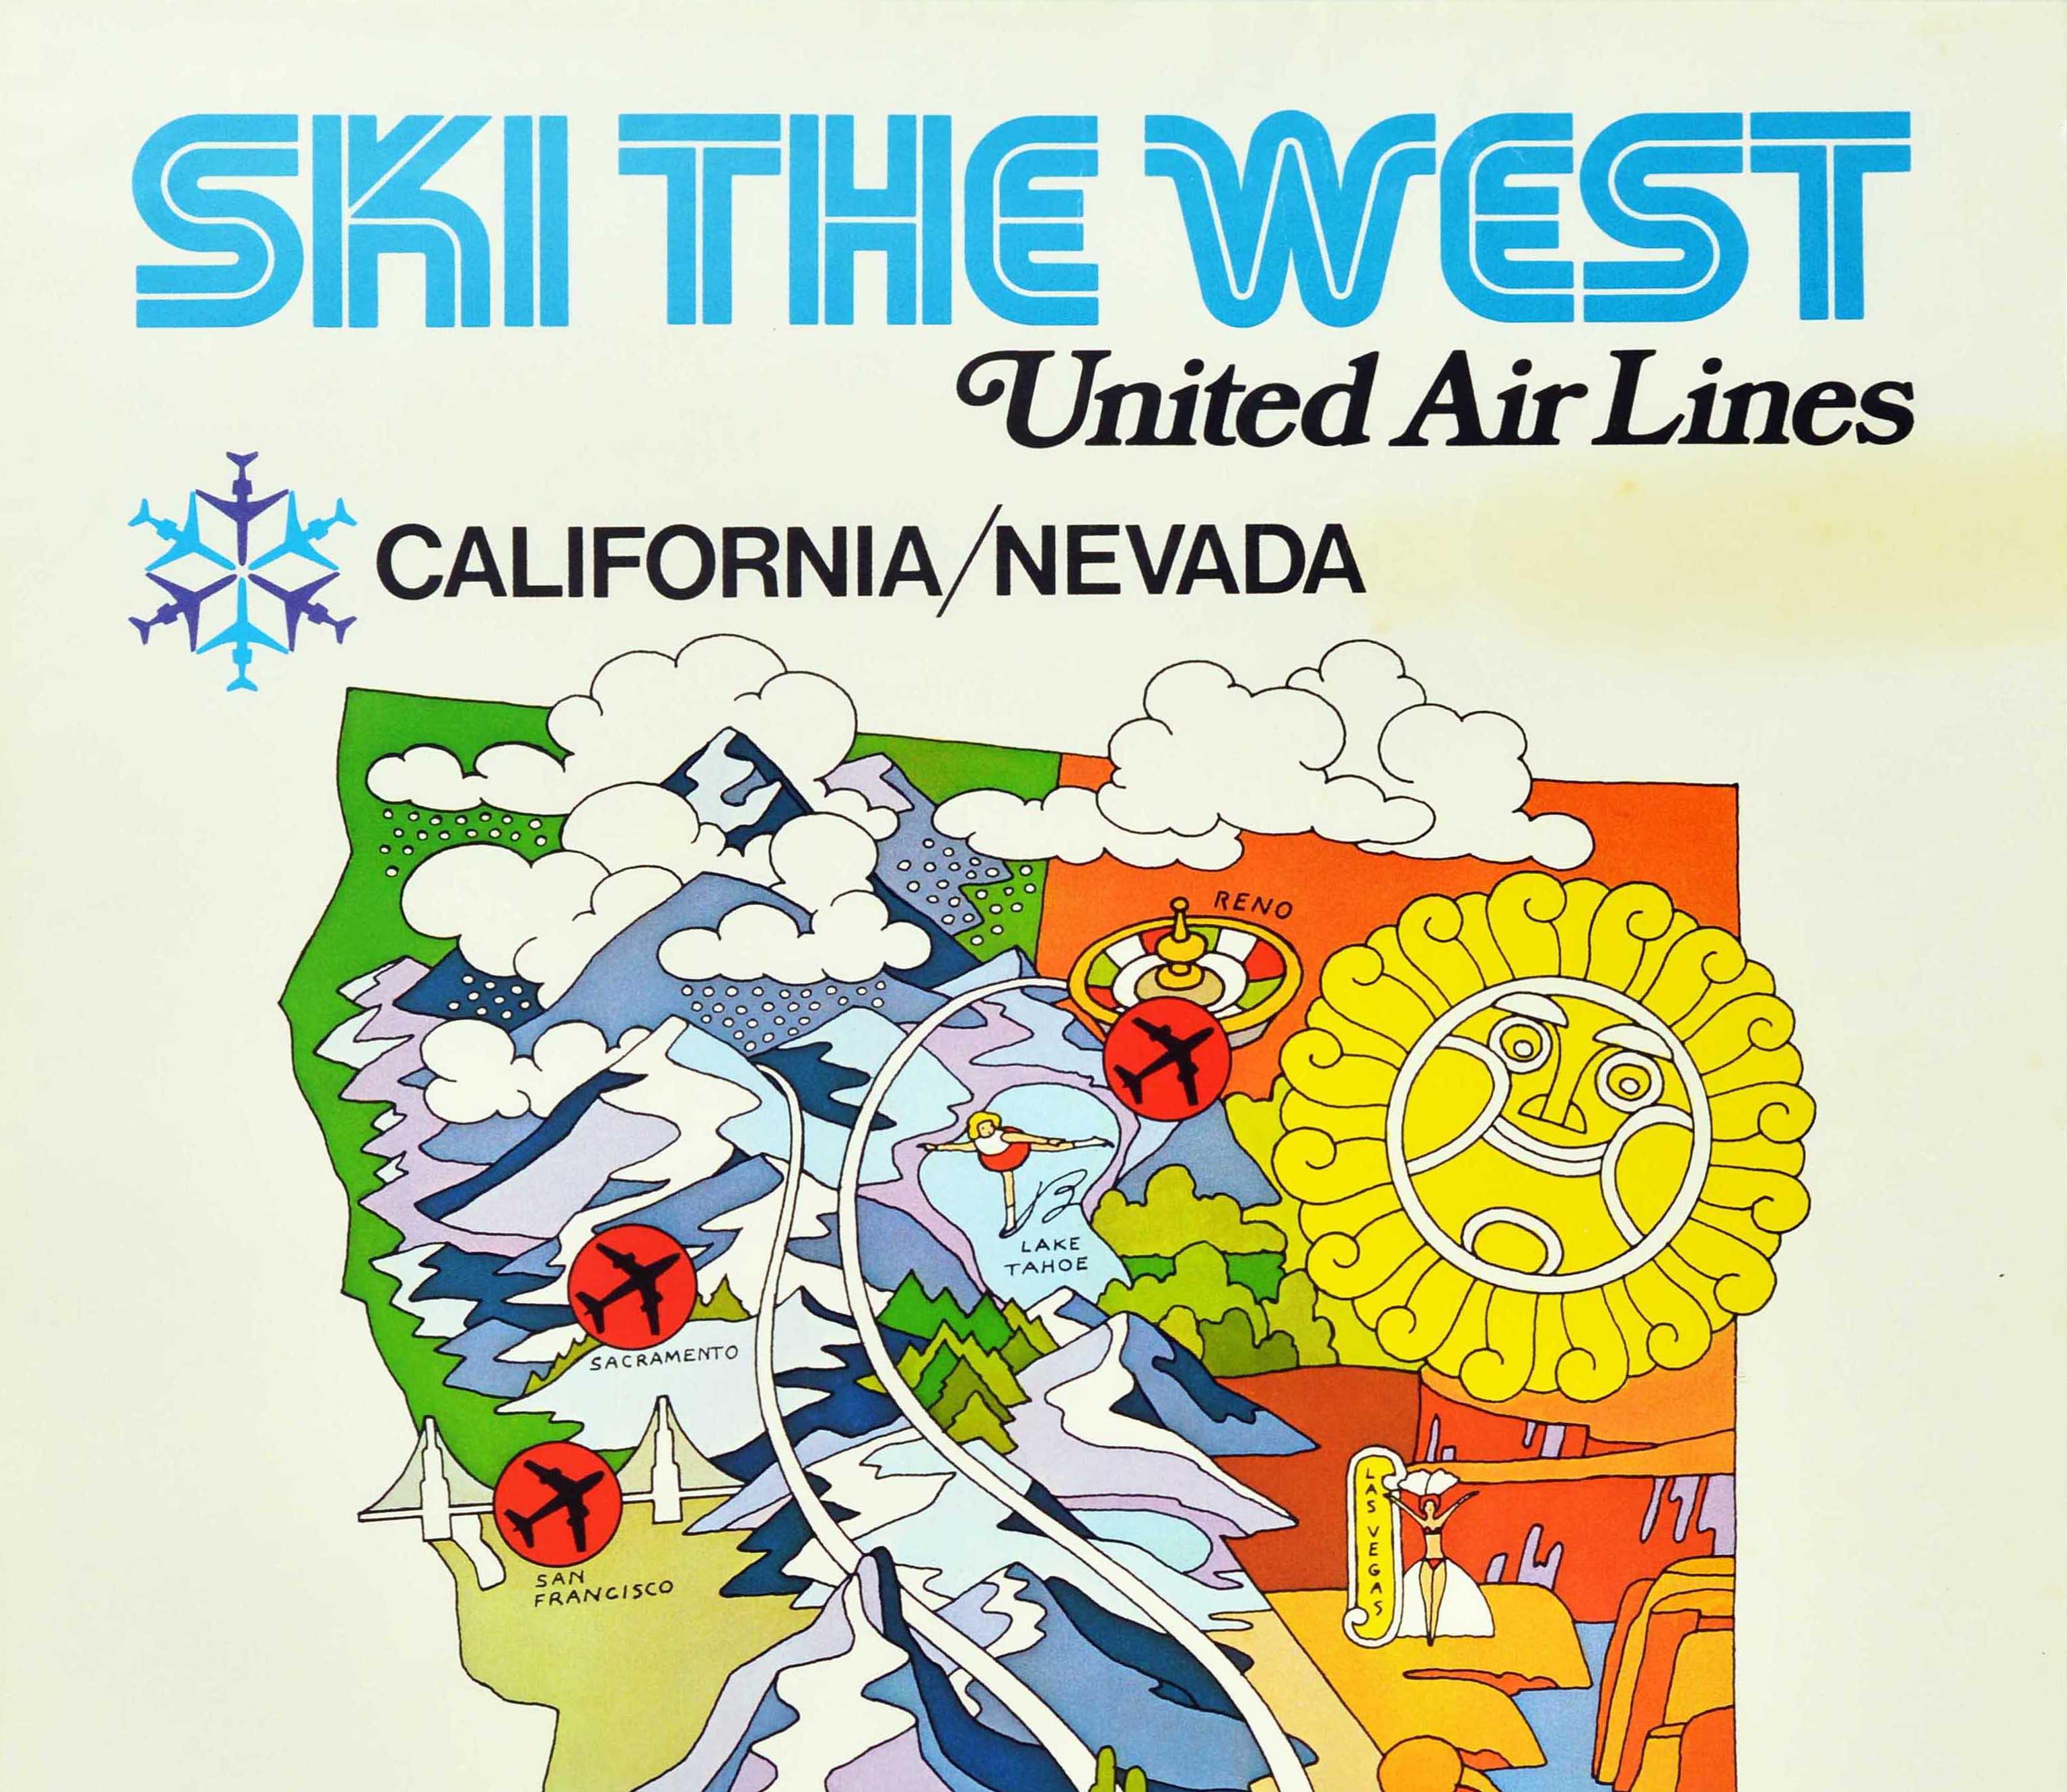 American Original Vintage Travel Poster Ski The West United Airlines California Nevada US